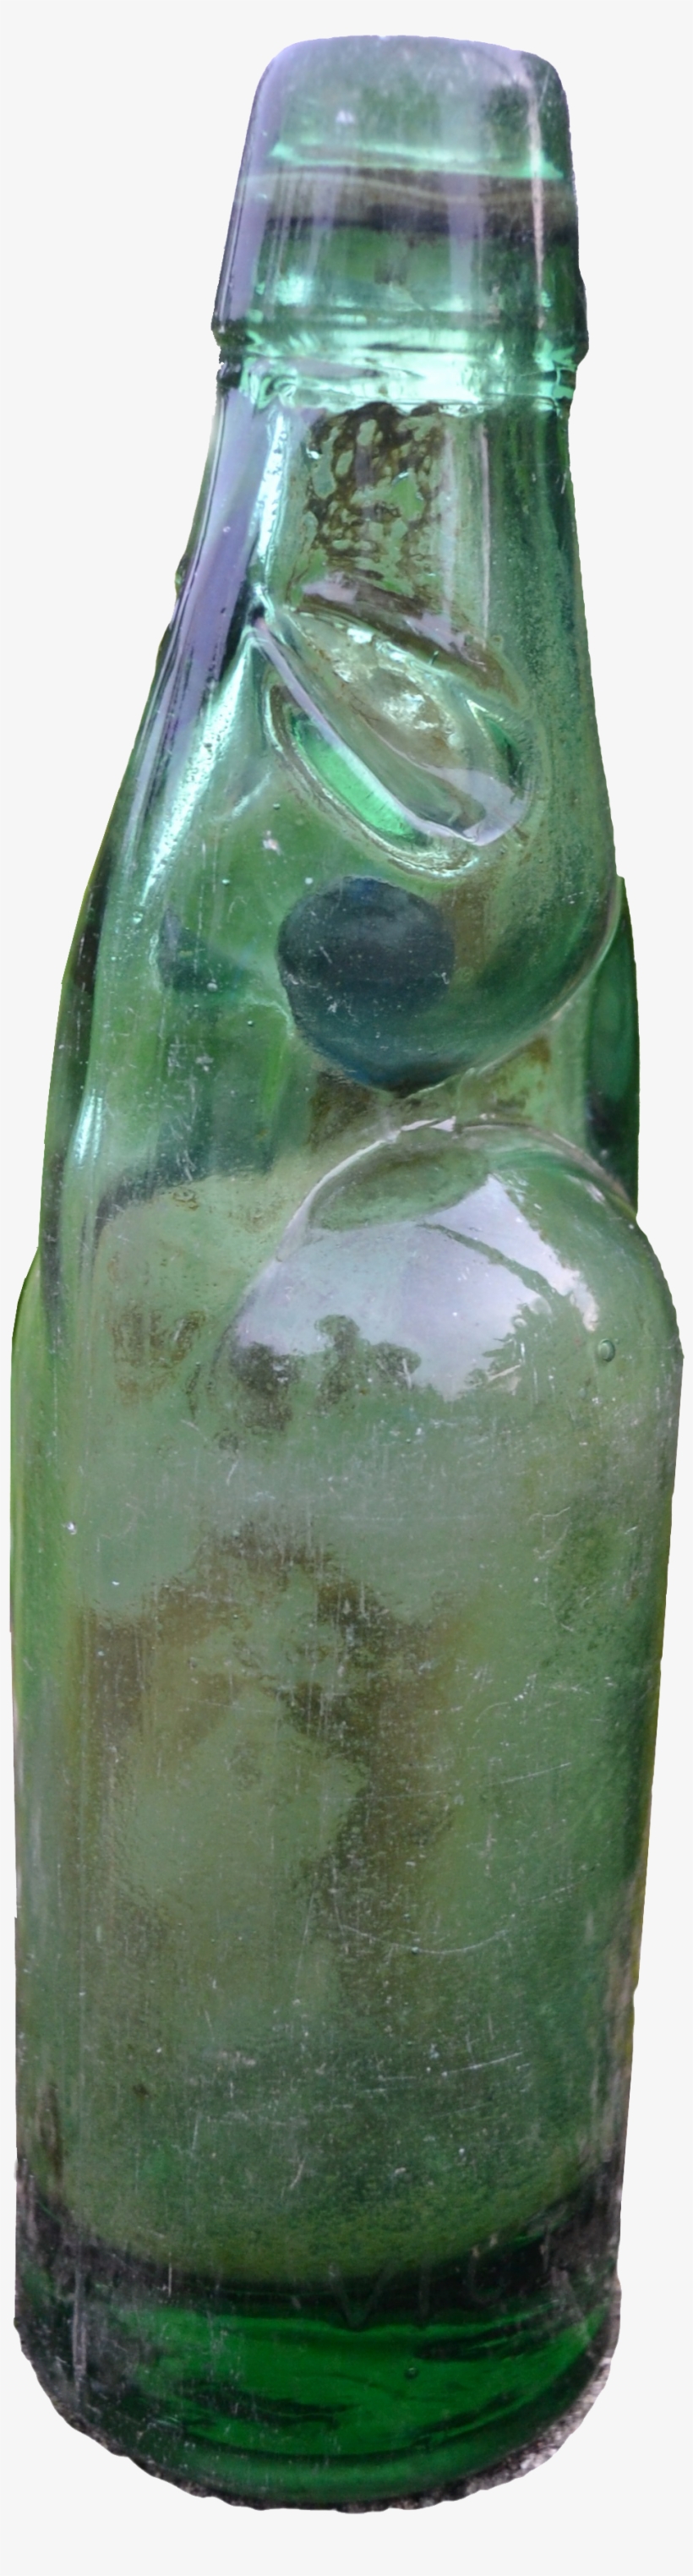 Codd-neck Soda Water Bottle From Kerala - Nimbu Lemon Bottle, transparent png #831150